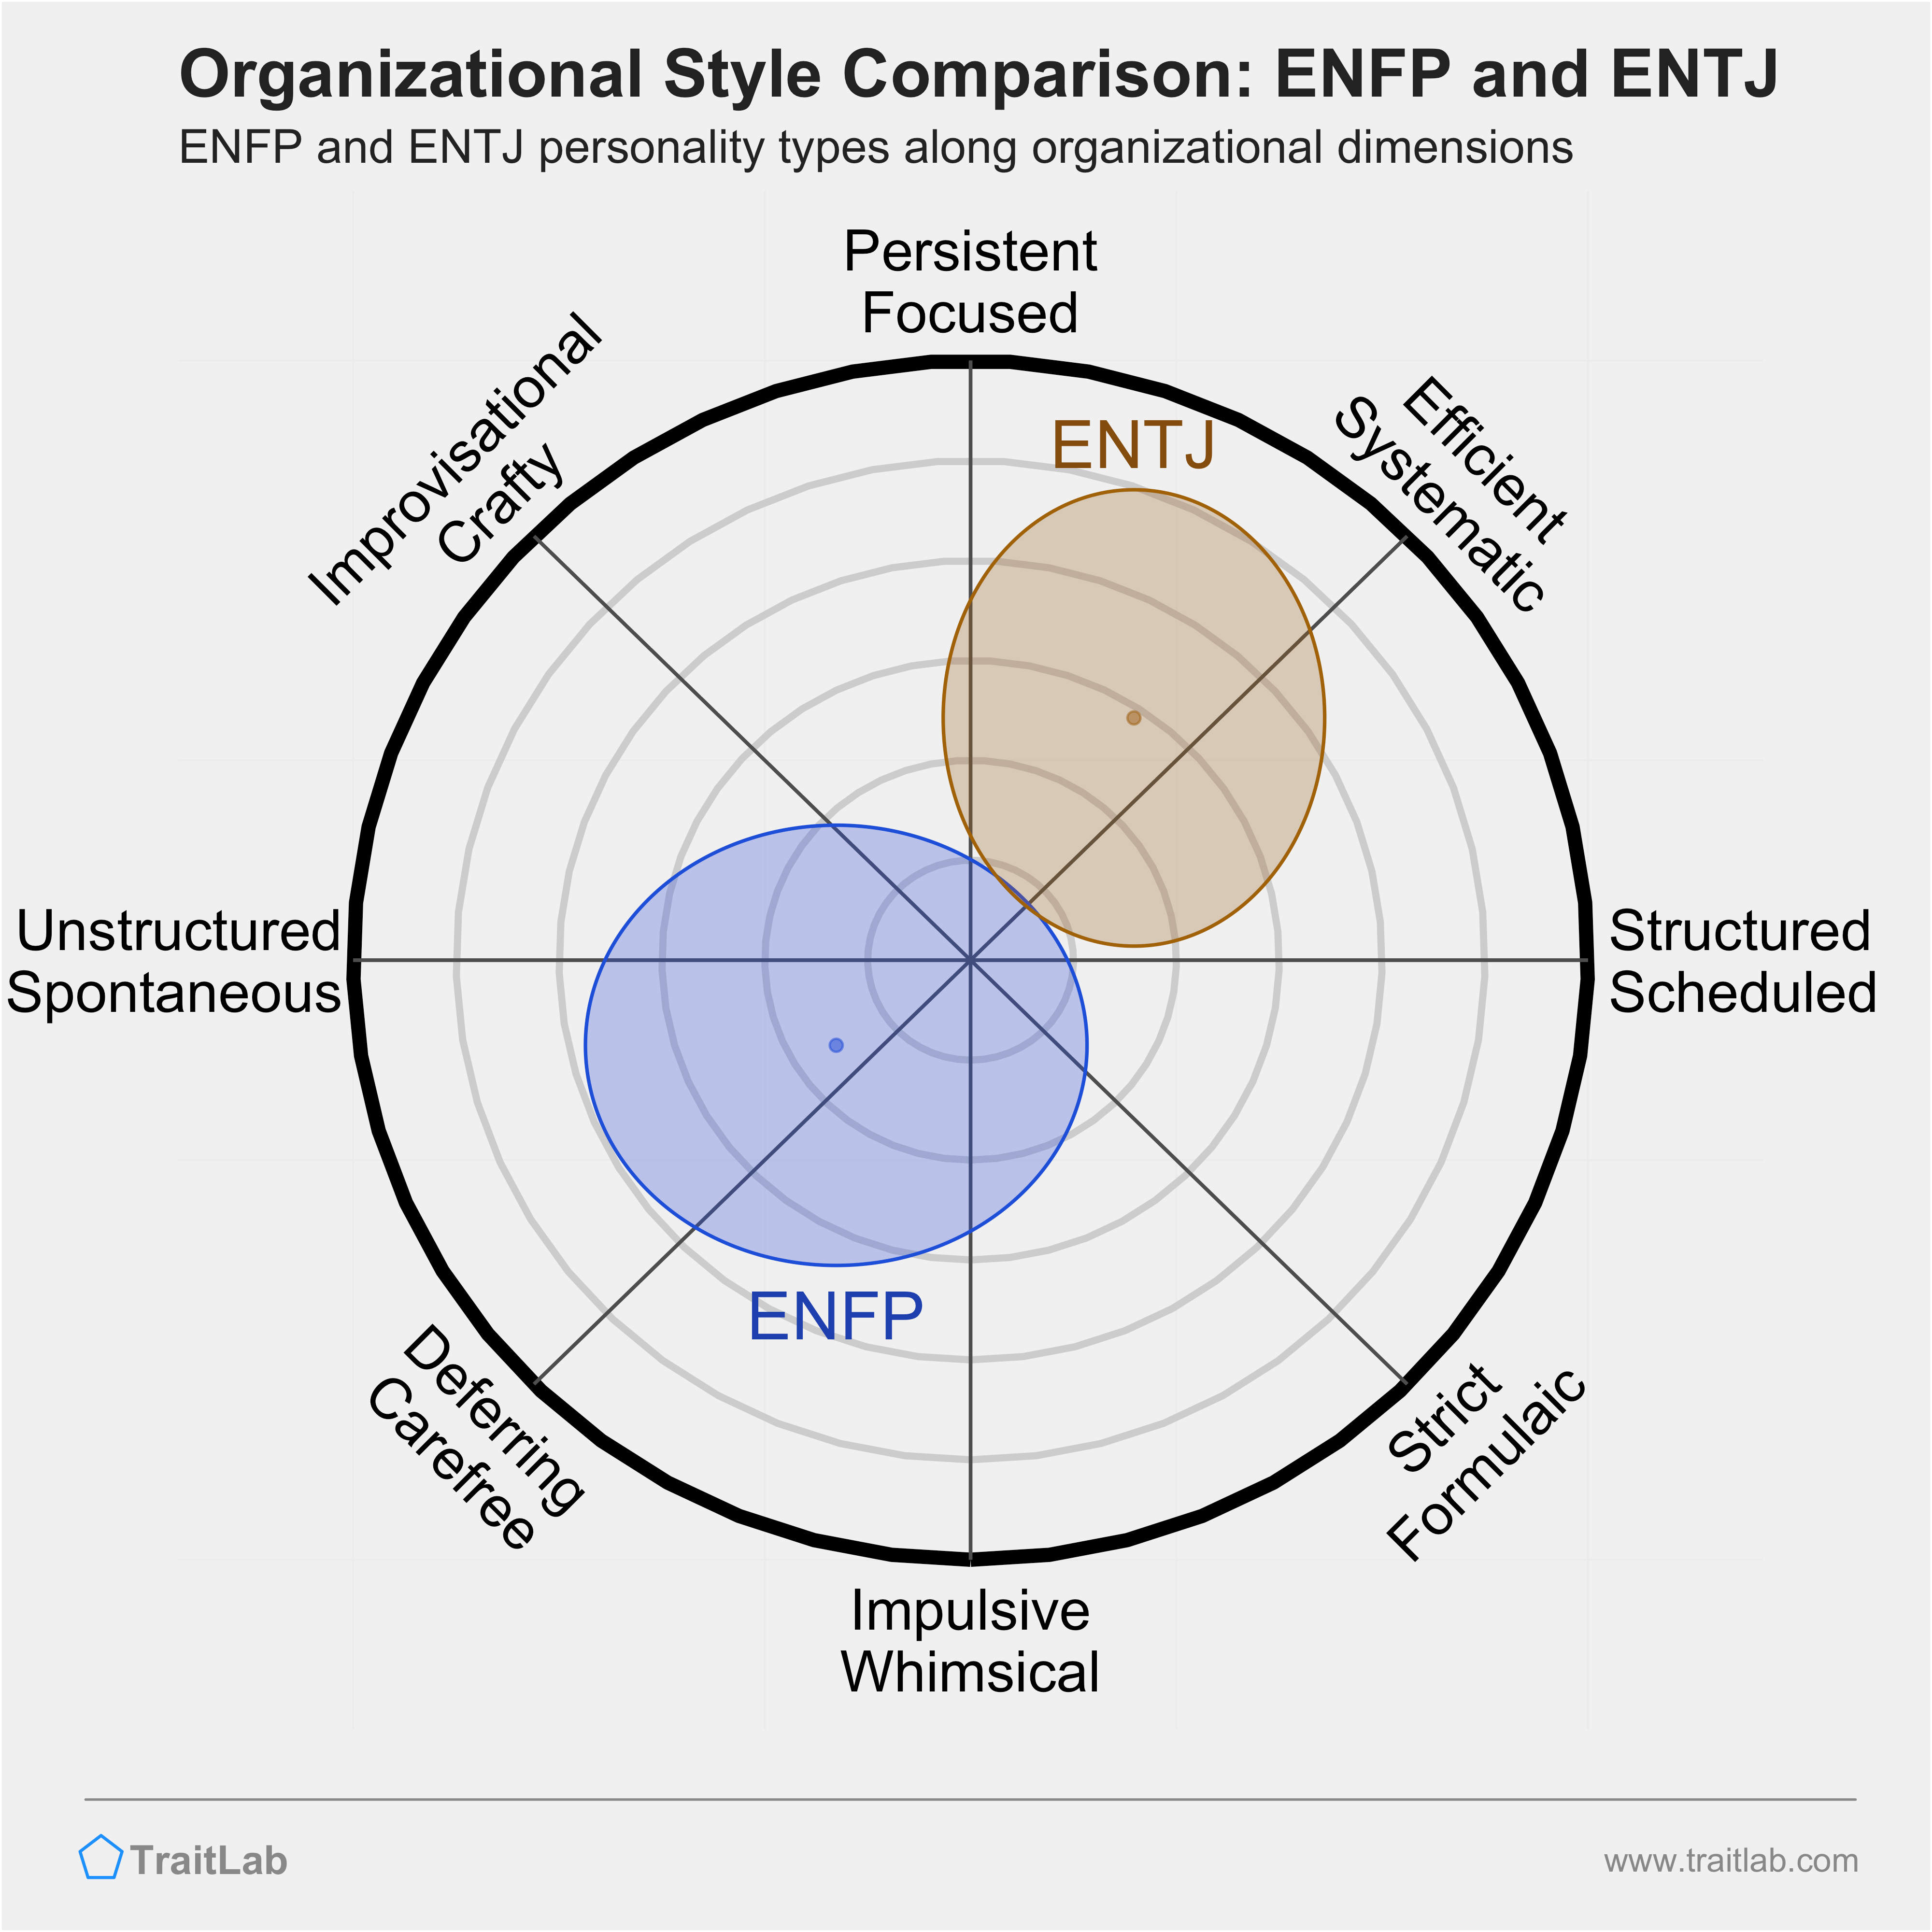 ENFP and ENTJ comparison across organizational dimensions